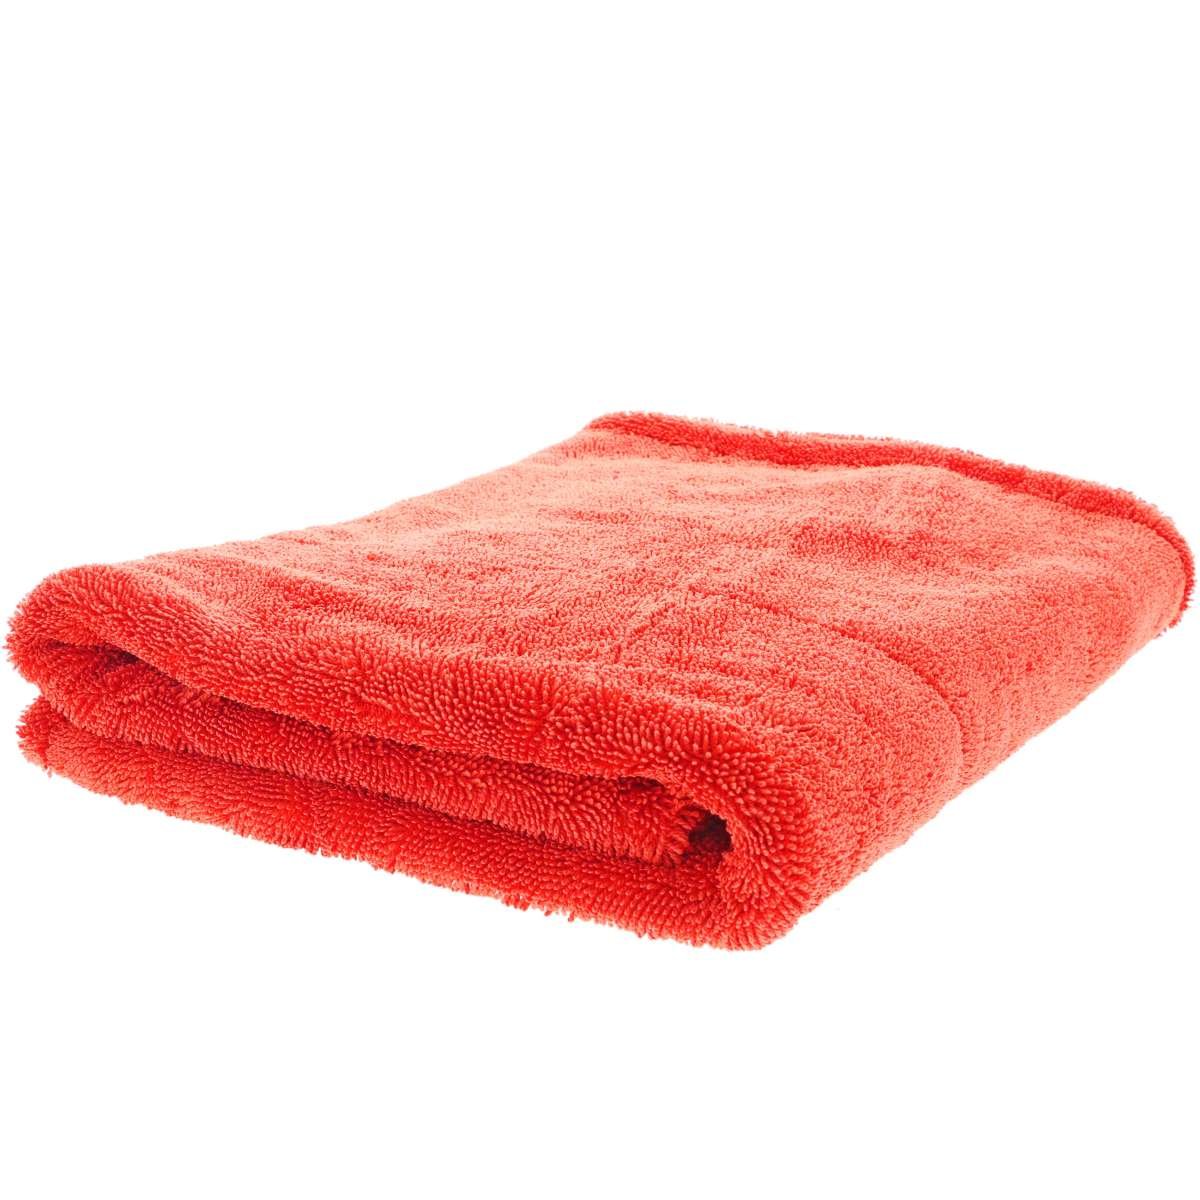 Doppino Doppio -  Double Sides Drying Towel - 70x80cm